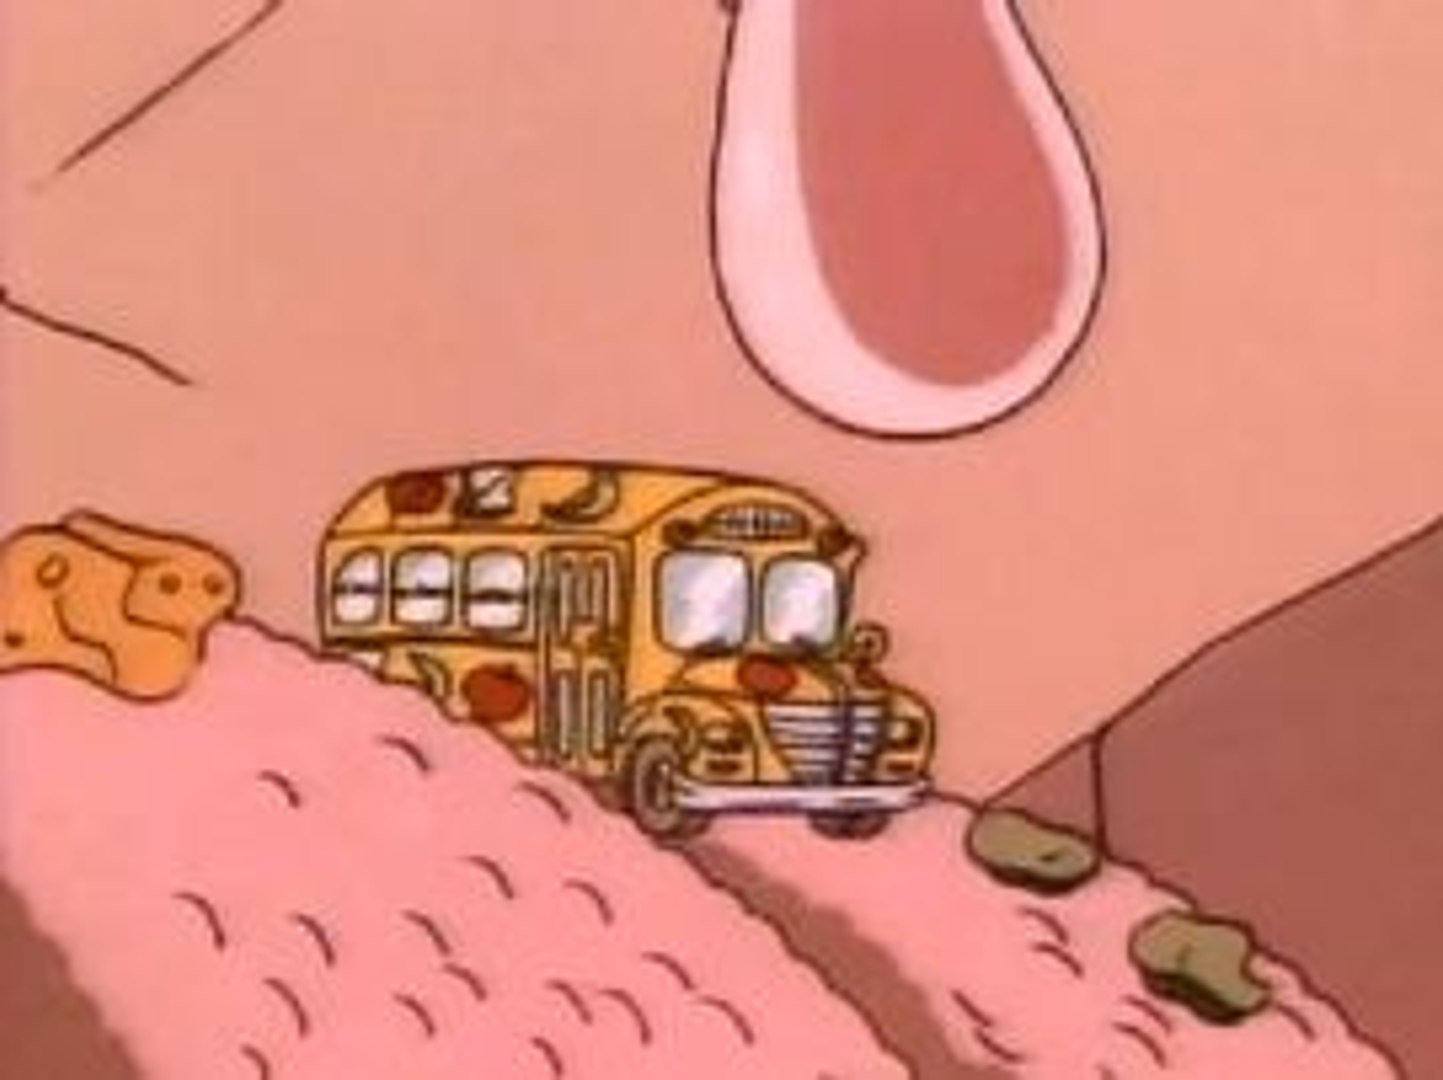 Magic School Bus Educational Episodes